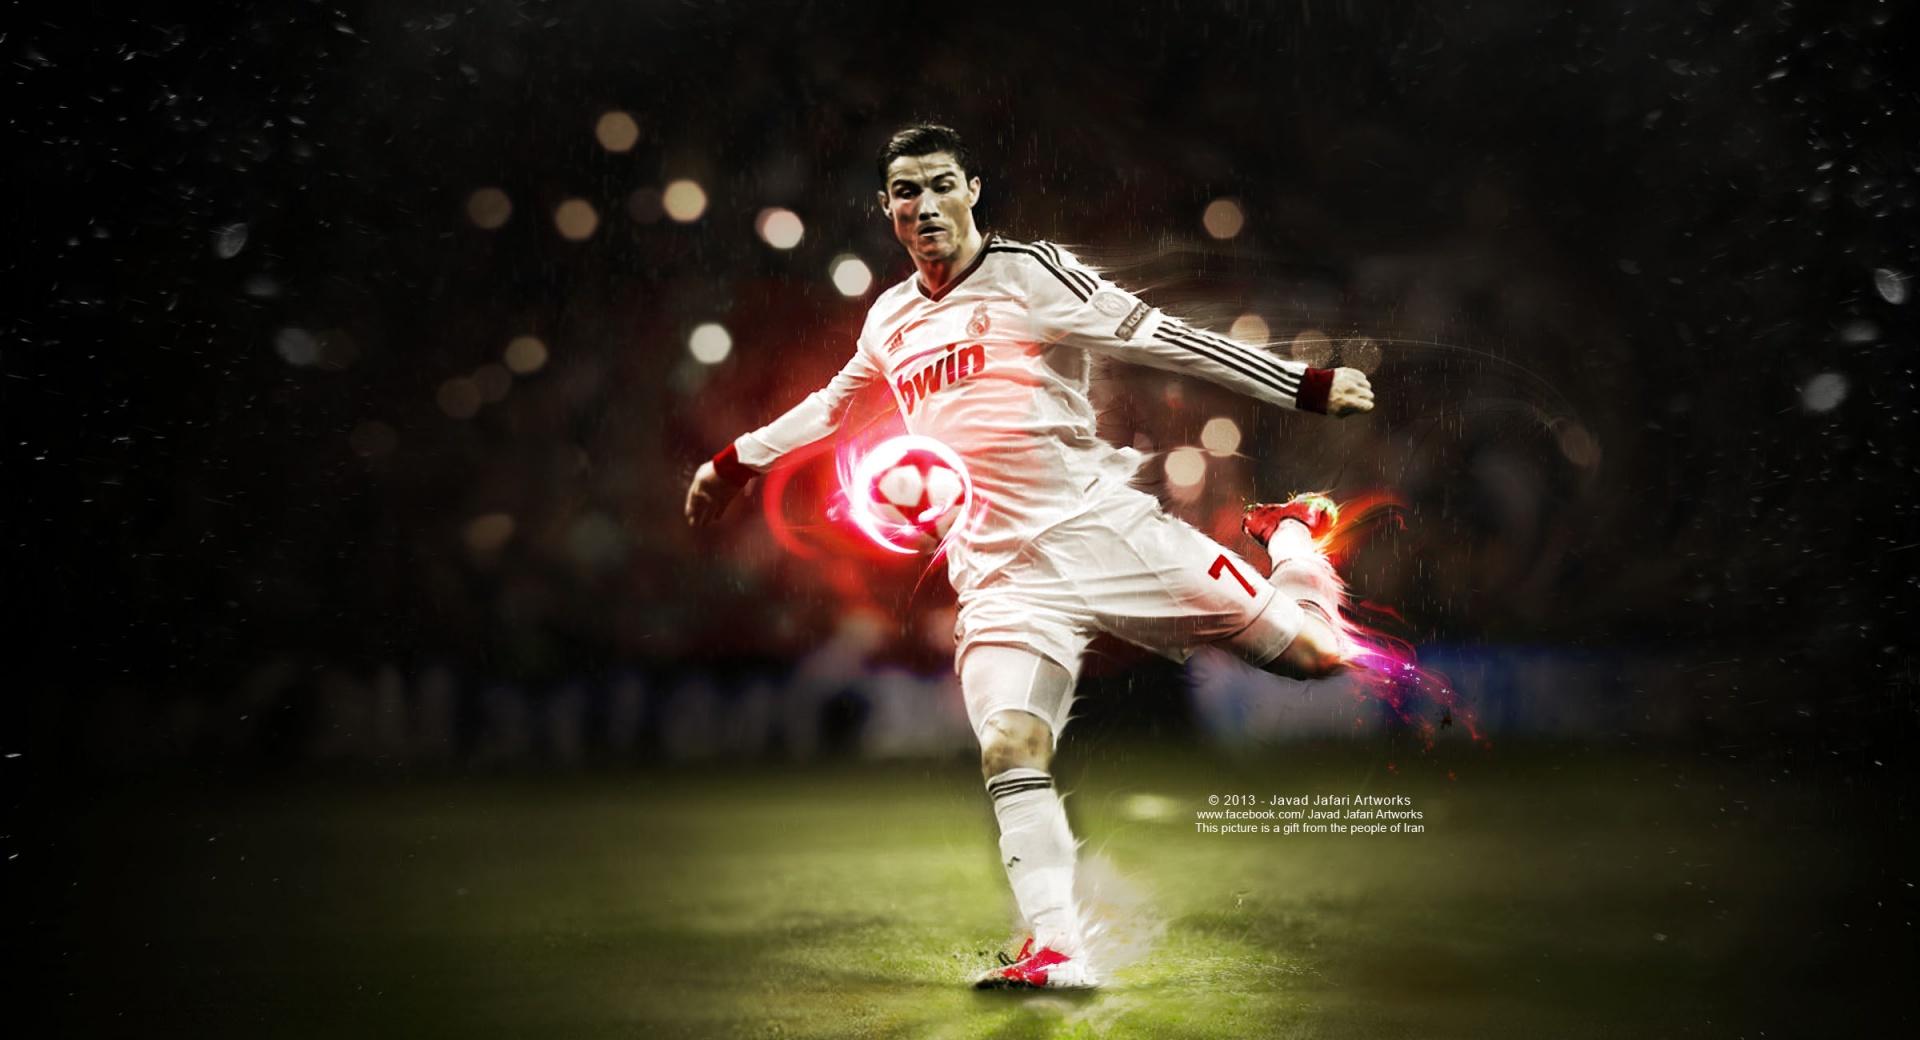 Ronaldo Kick at 1024 x 768 size wallpapers HD quality